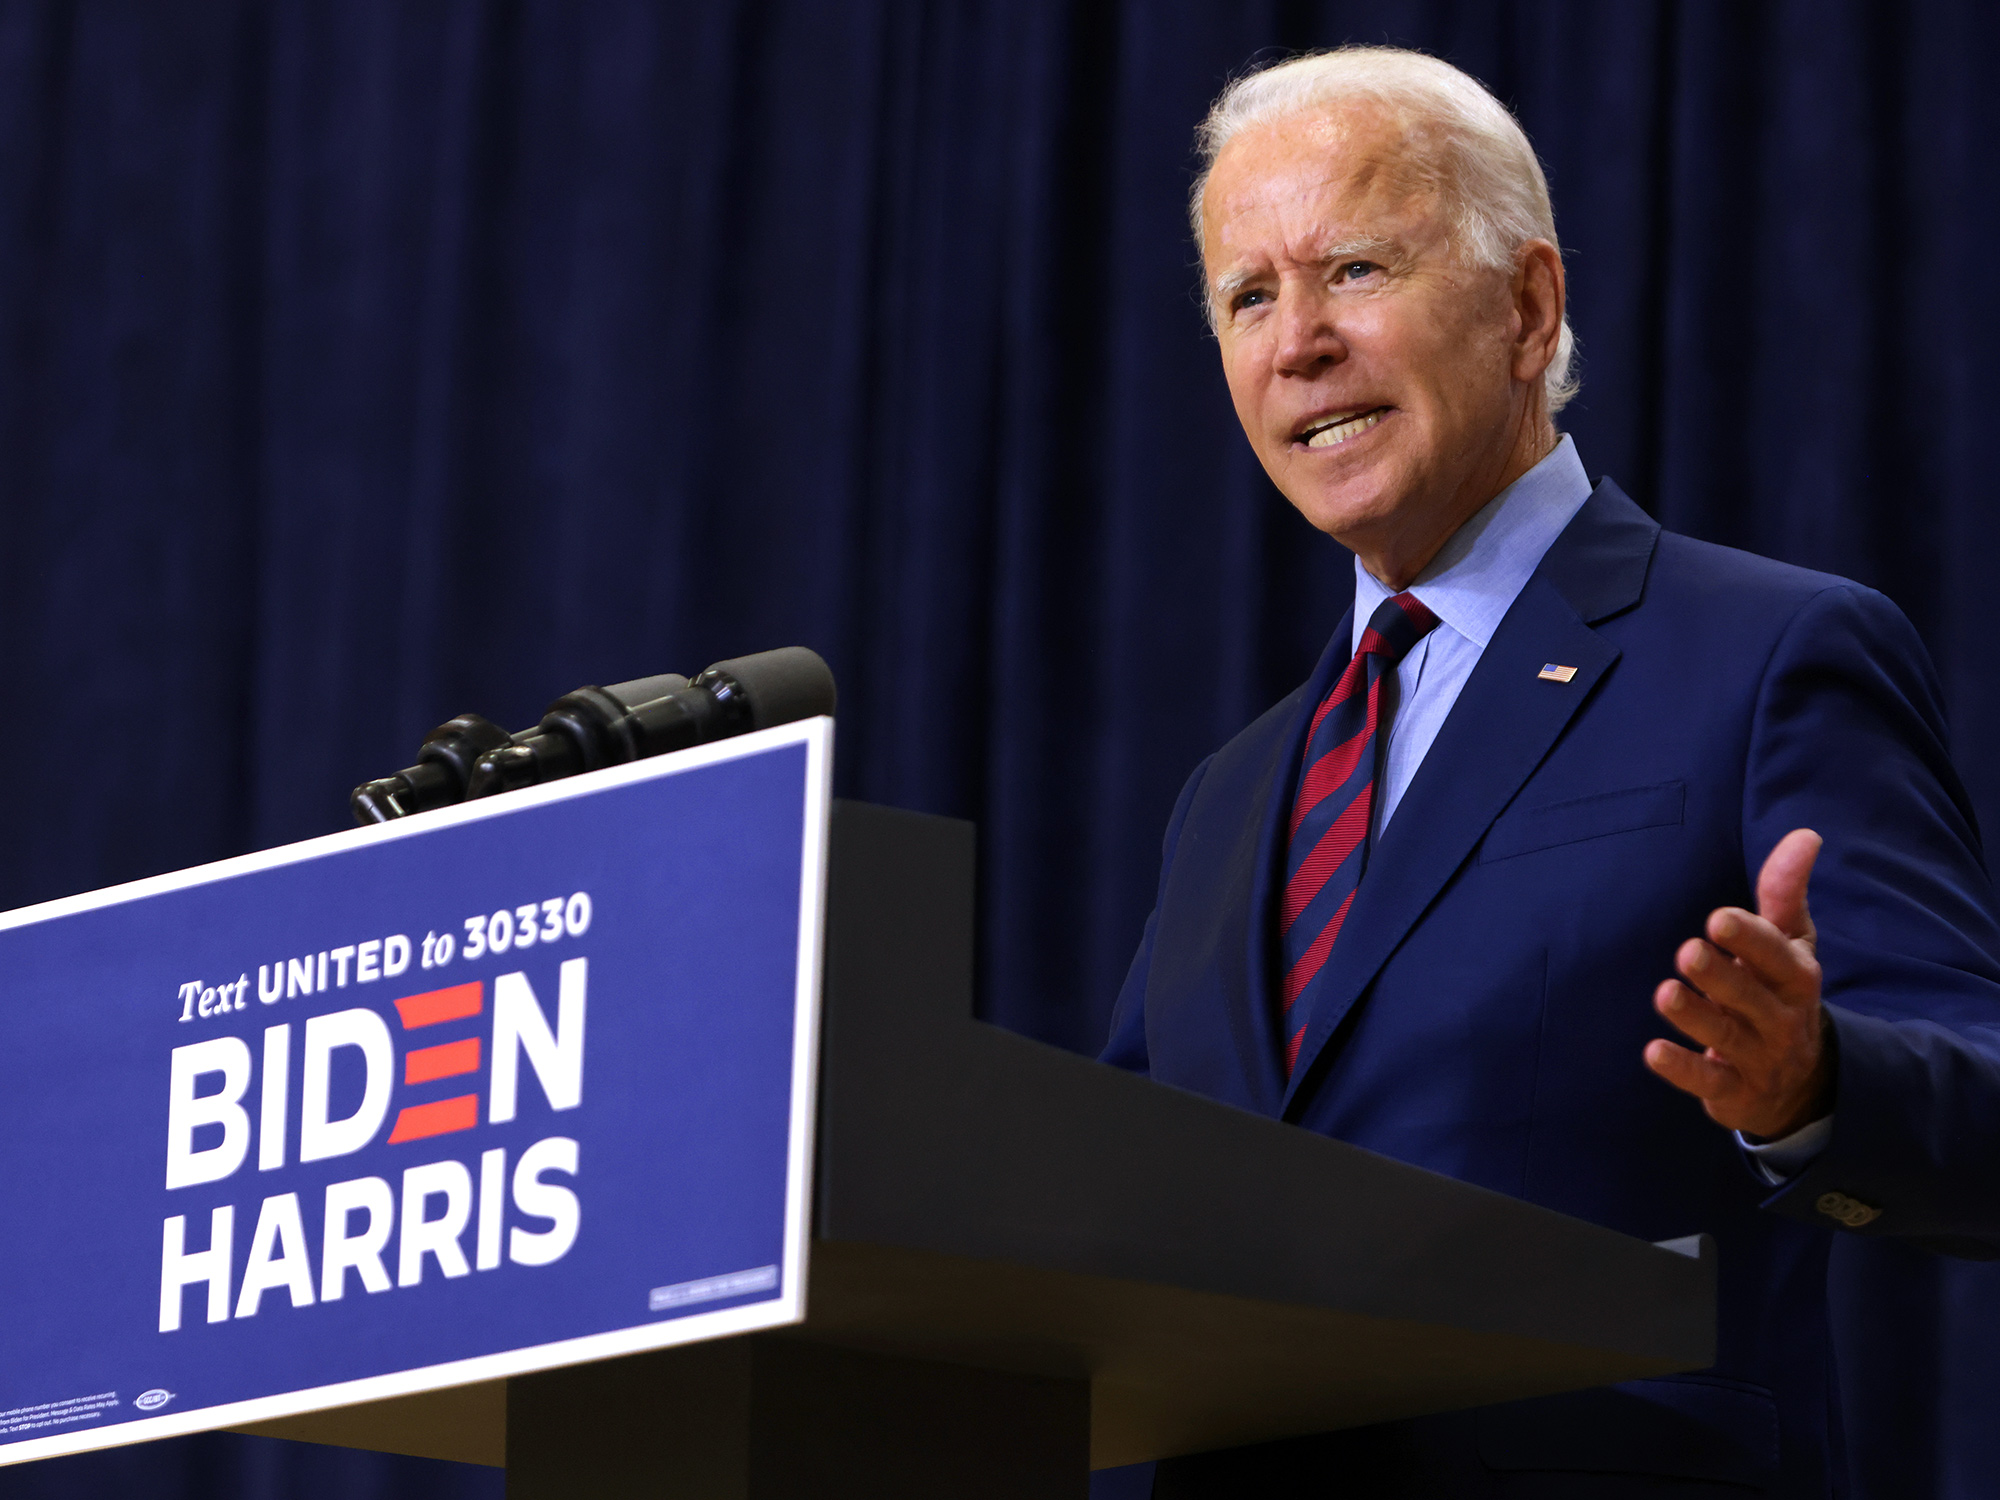 Joe Biden speaks during a campaign event in Wilmington, Delaware, on Sept. 4.